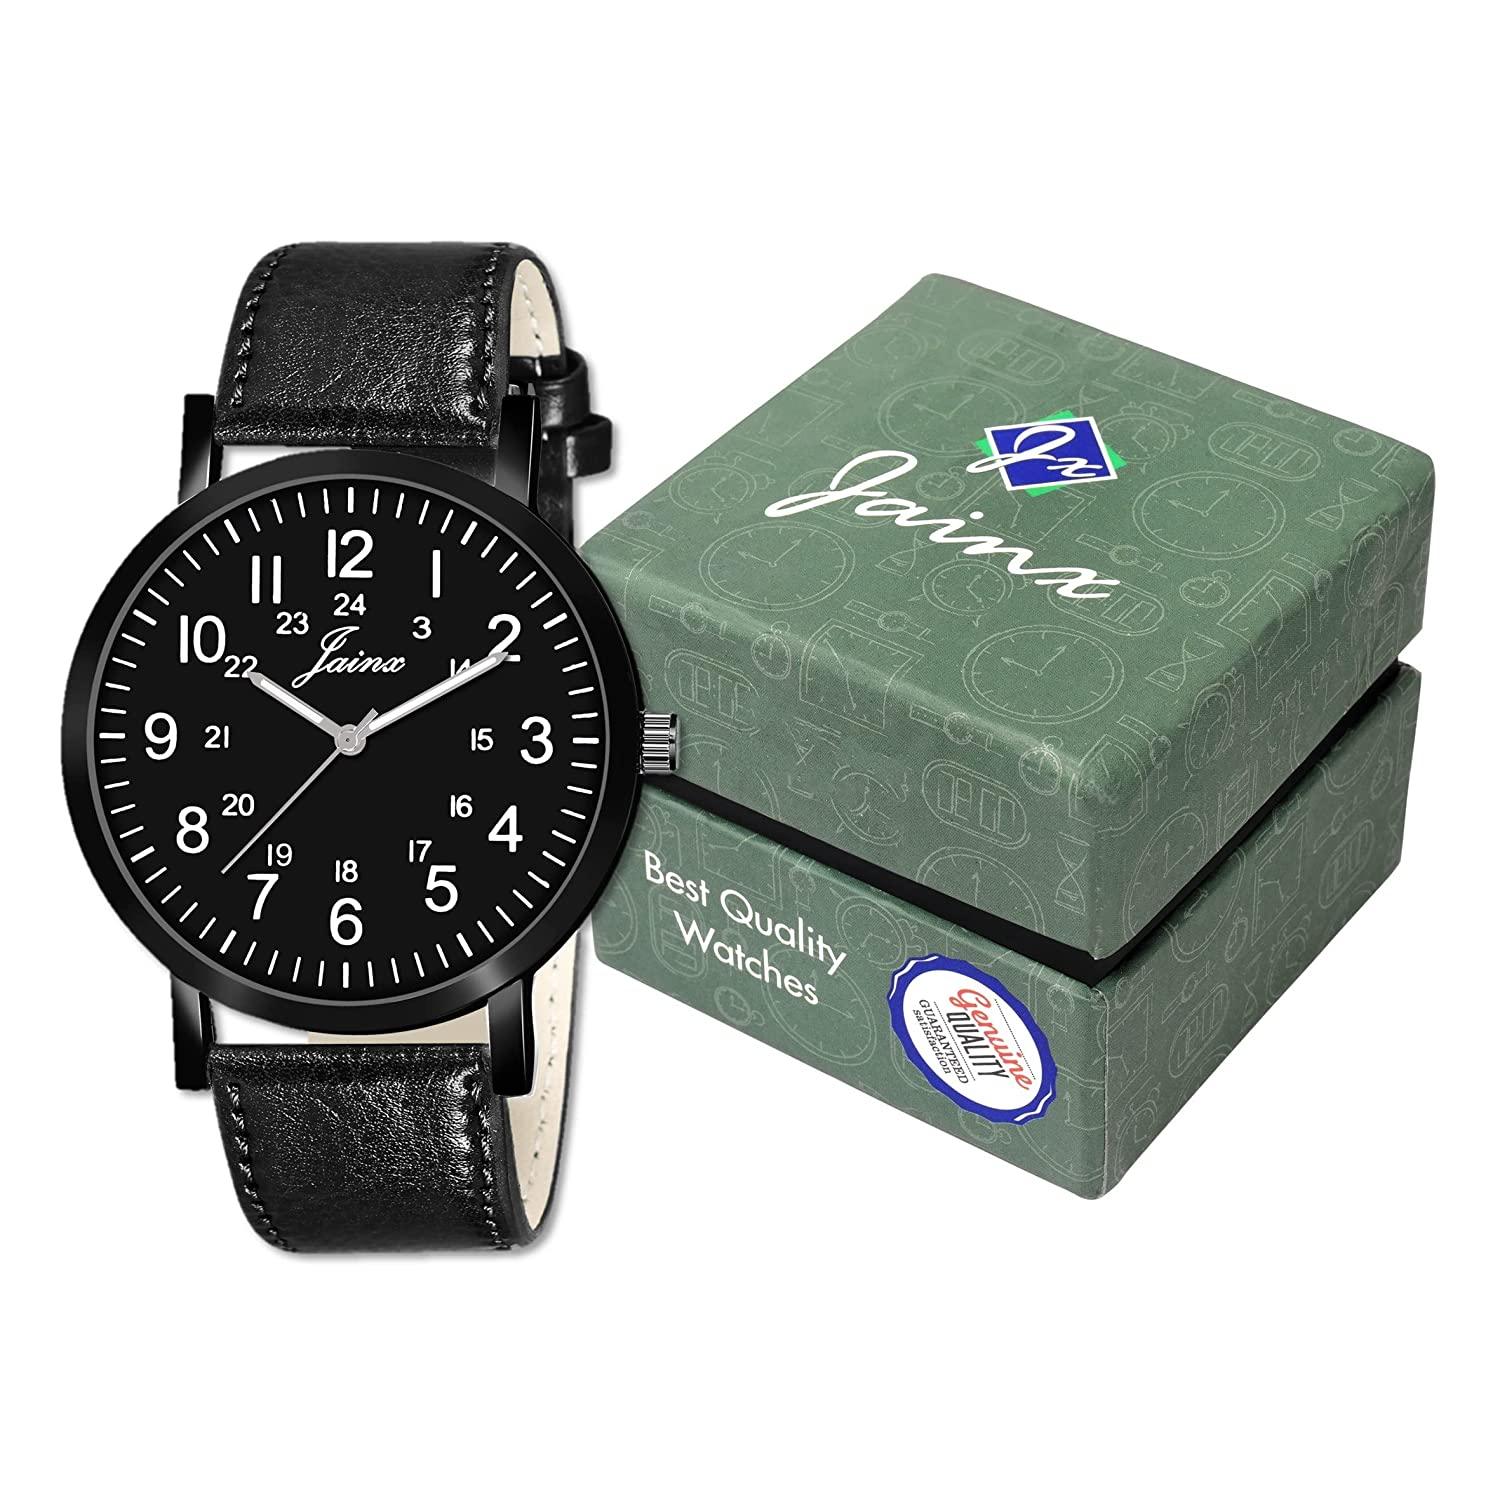 Men's Black Dial Leather Strap Analog Watch - JM7145 - Jainx Store